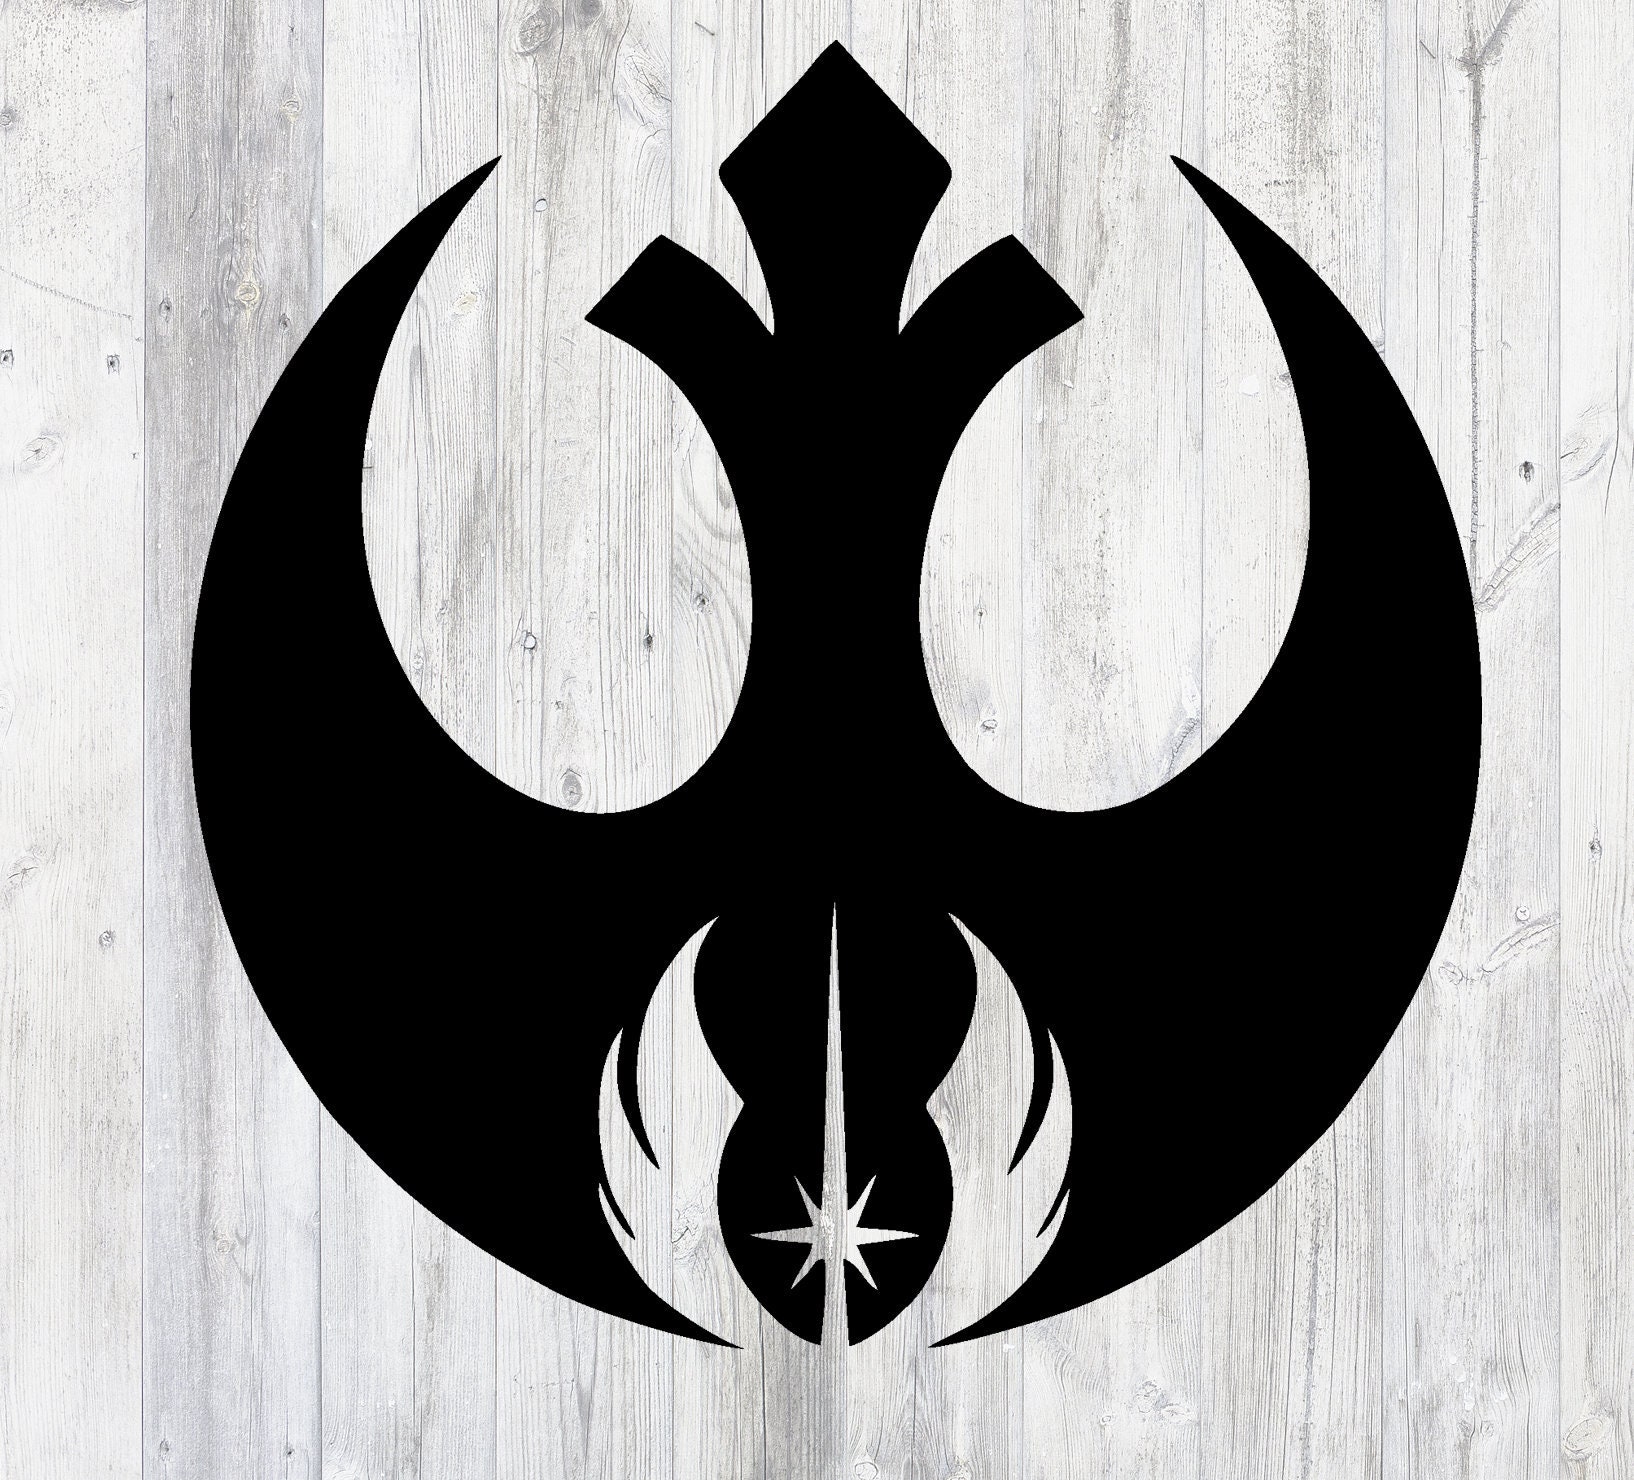 Star Wars Style Rebel Alliance Logo Wall Window Sticker Vinyl Decal 